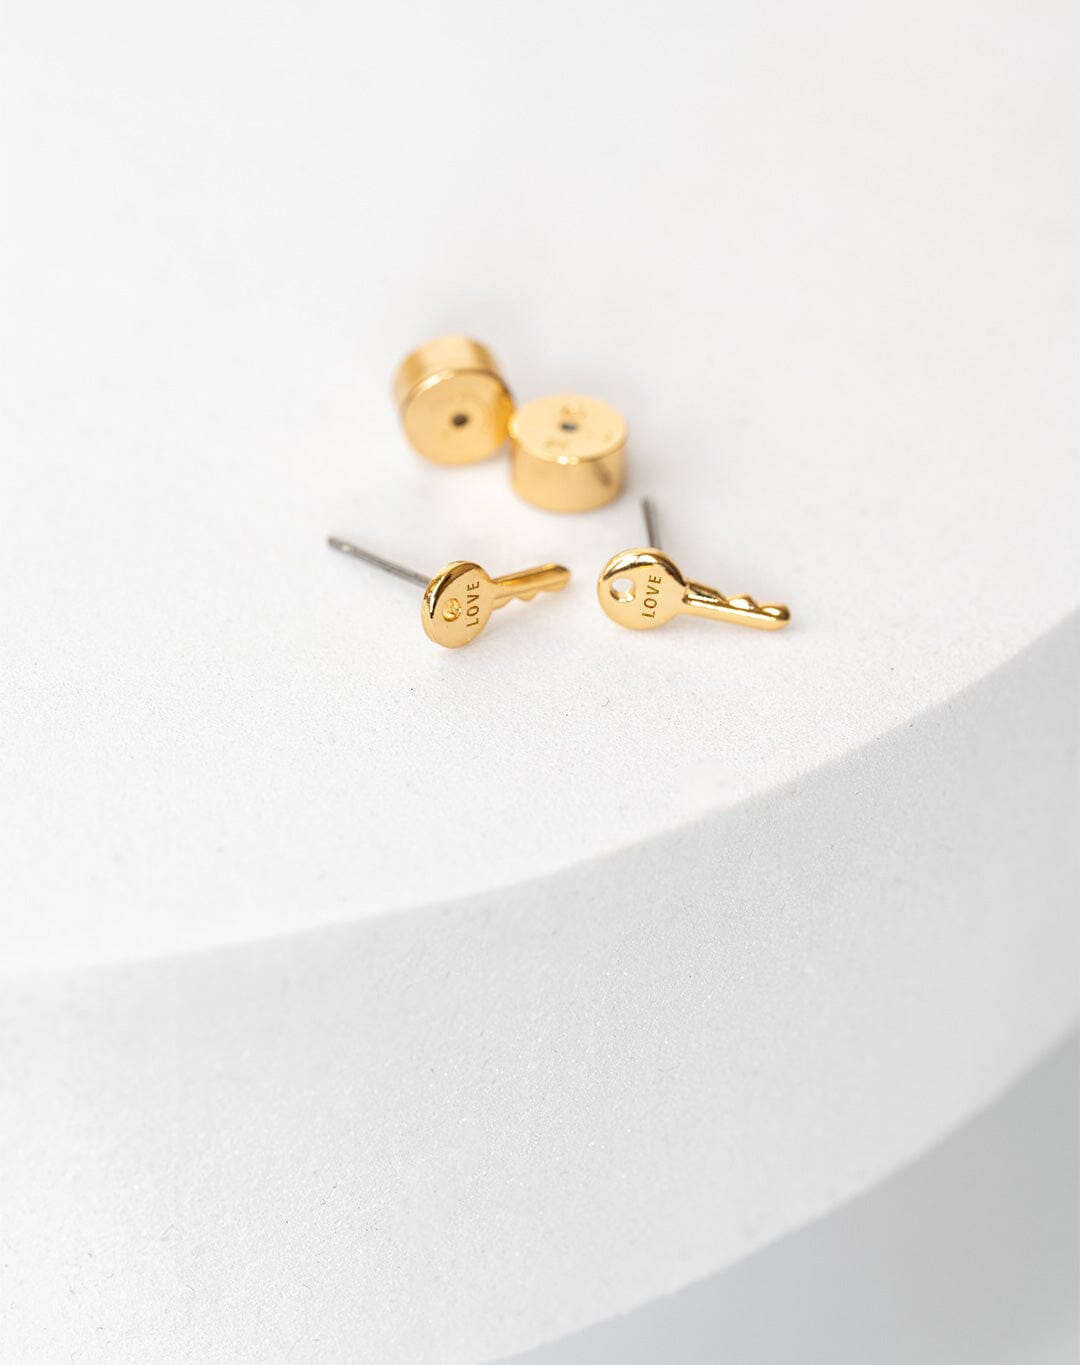 Mini Key Post Earrings Earrings The Giving Keys LOVE Gold 